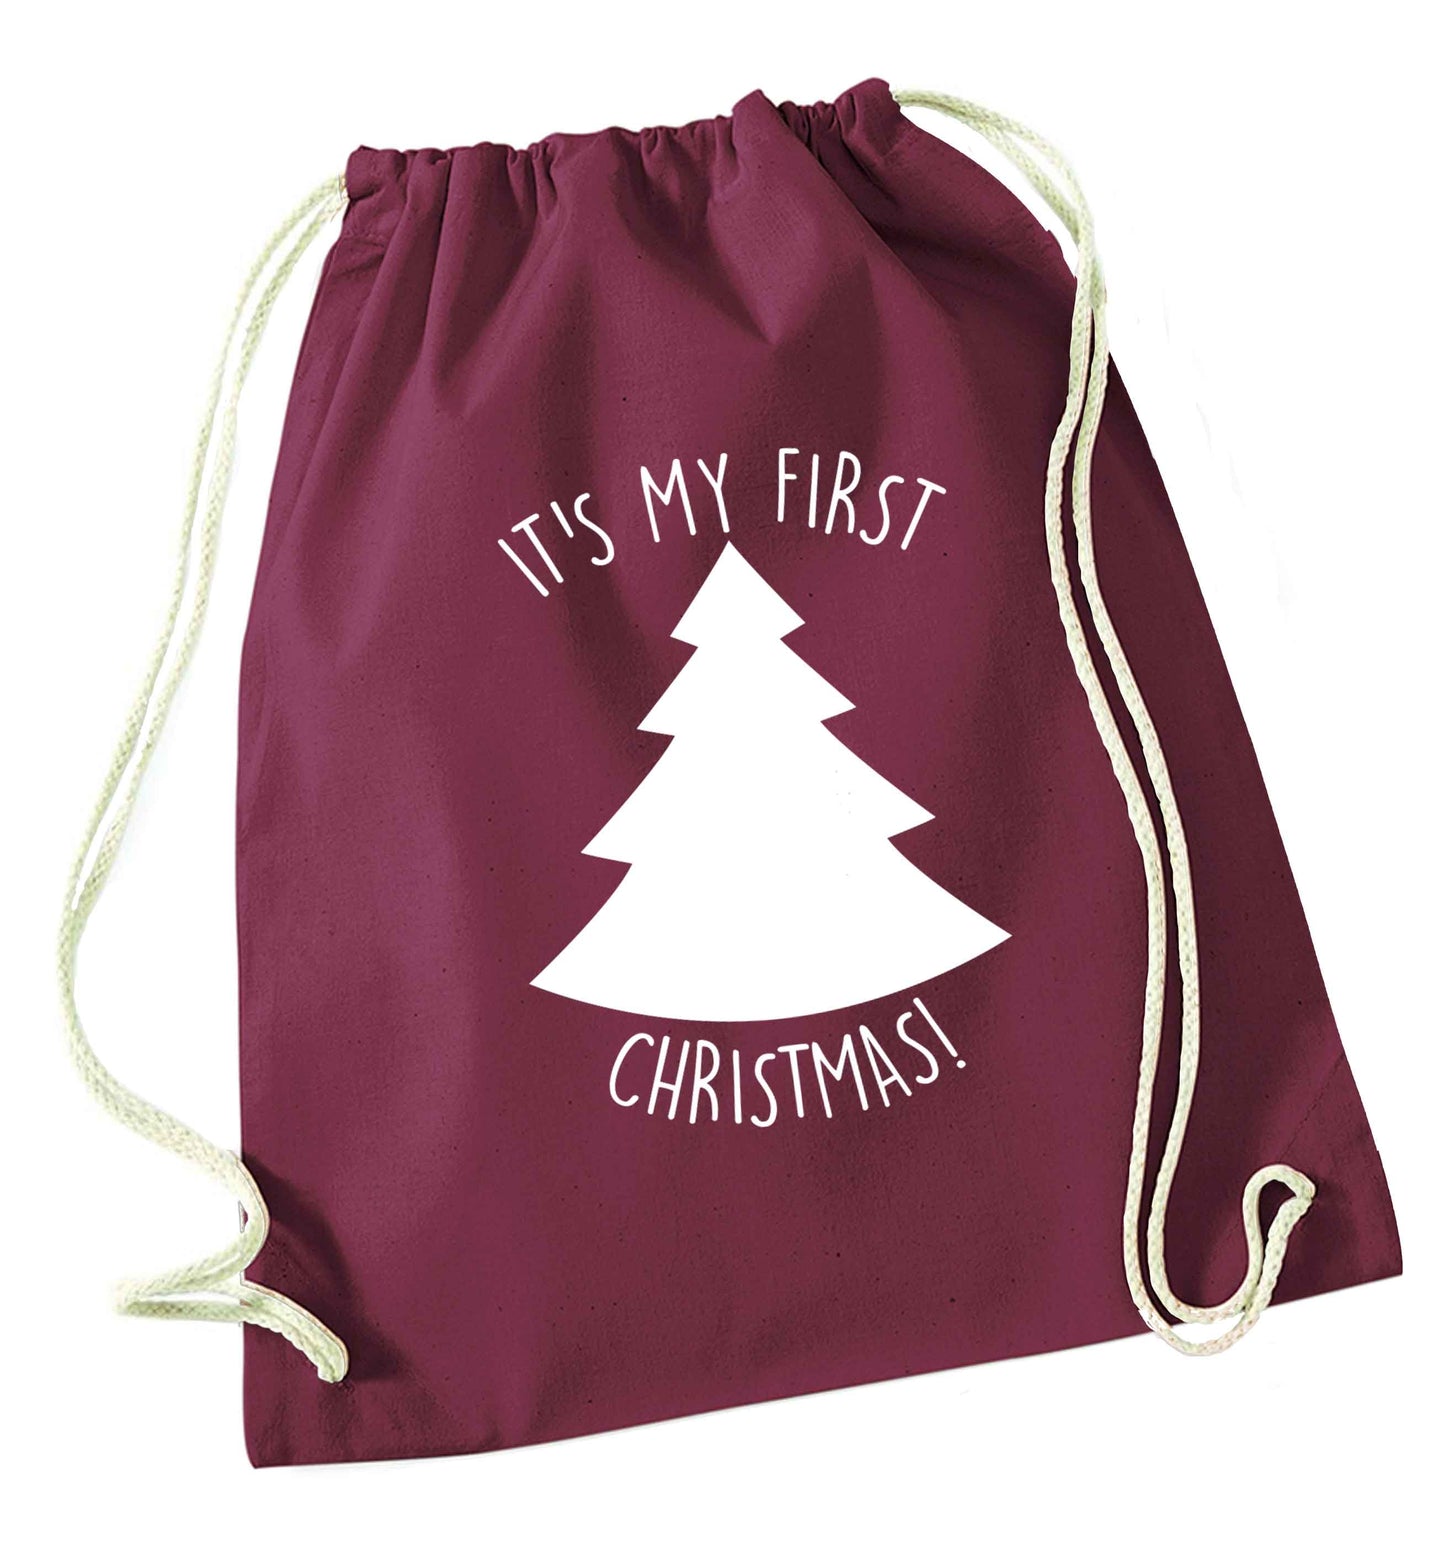 It's my first Christmas - tree maroon drawstring bag